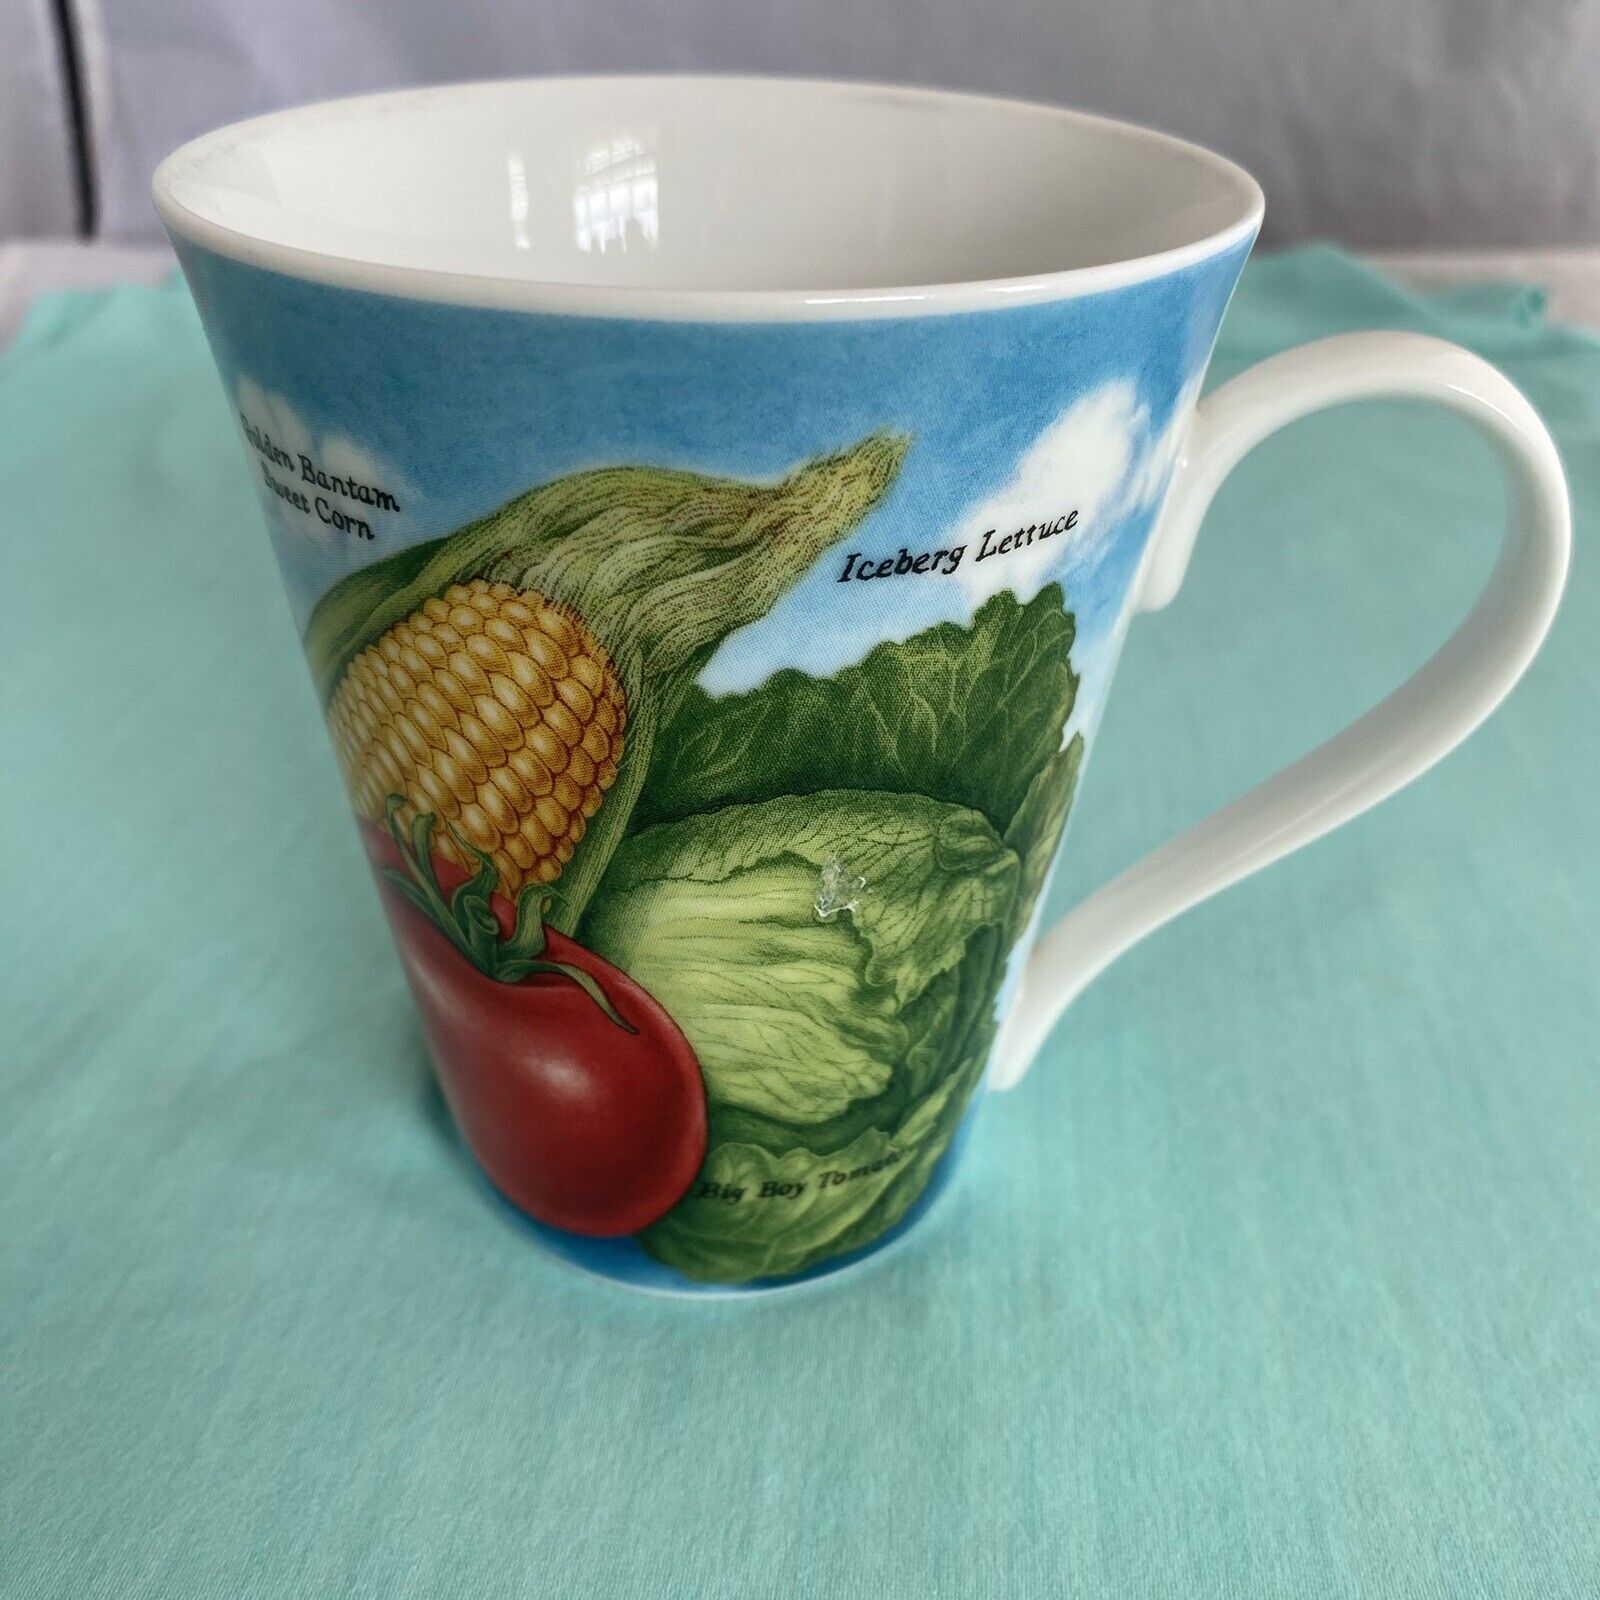 Burpee Seed Coffee Mug 125th Anniversary Collectible Floral &Veggies 2001 Cup